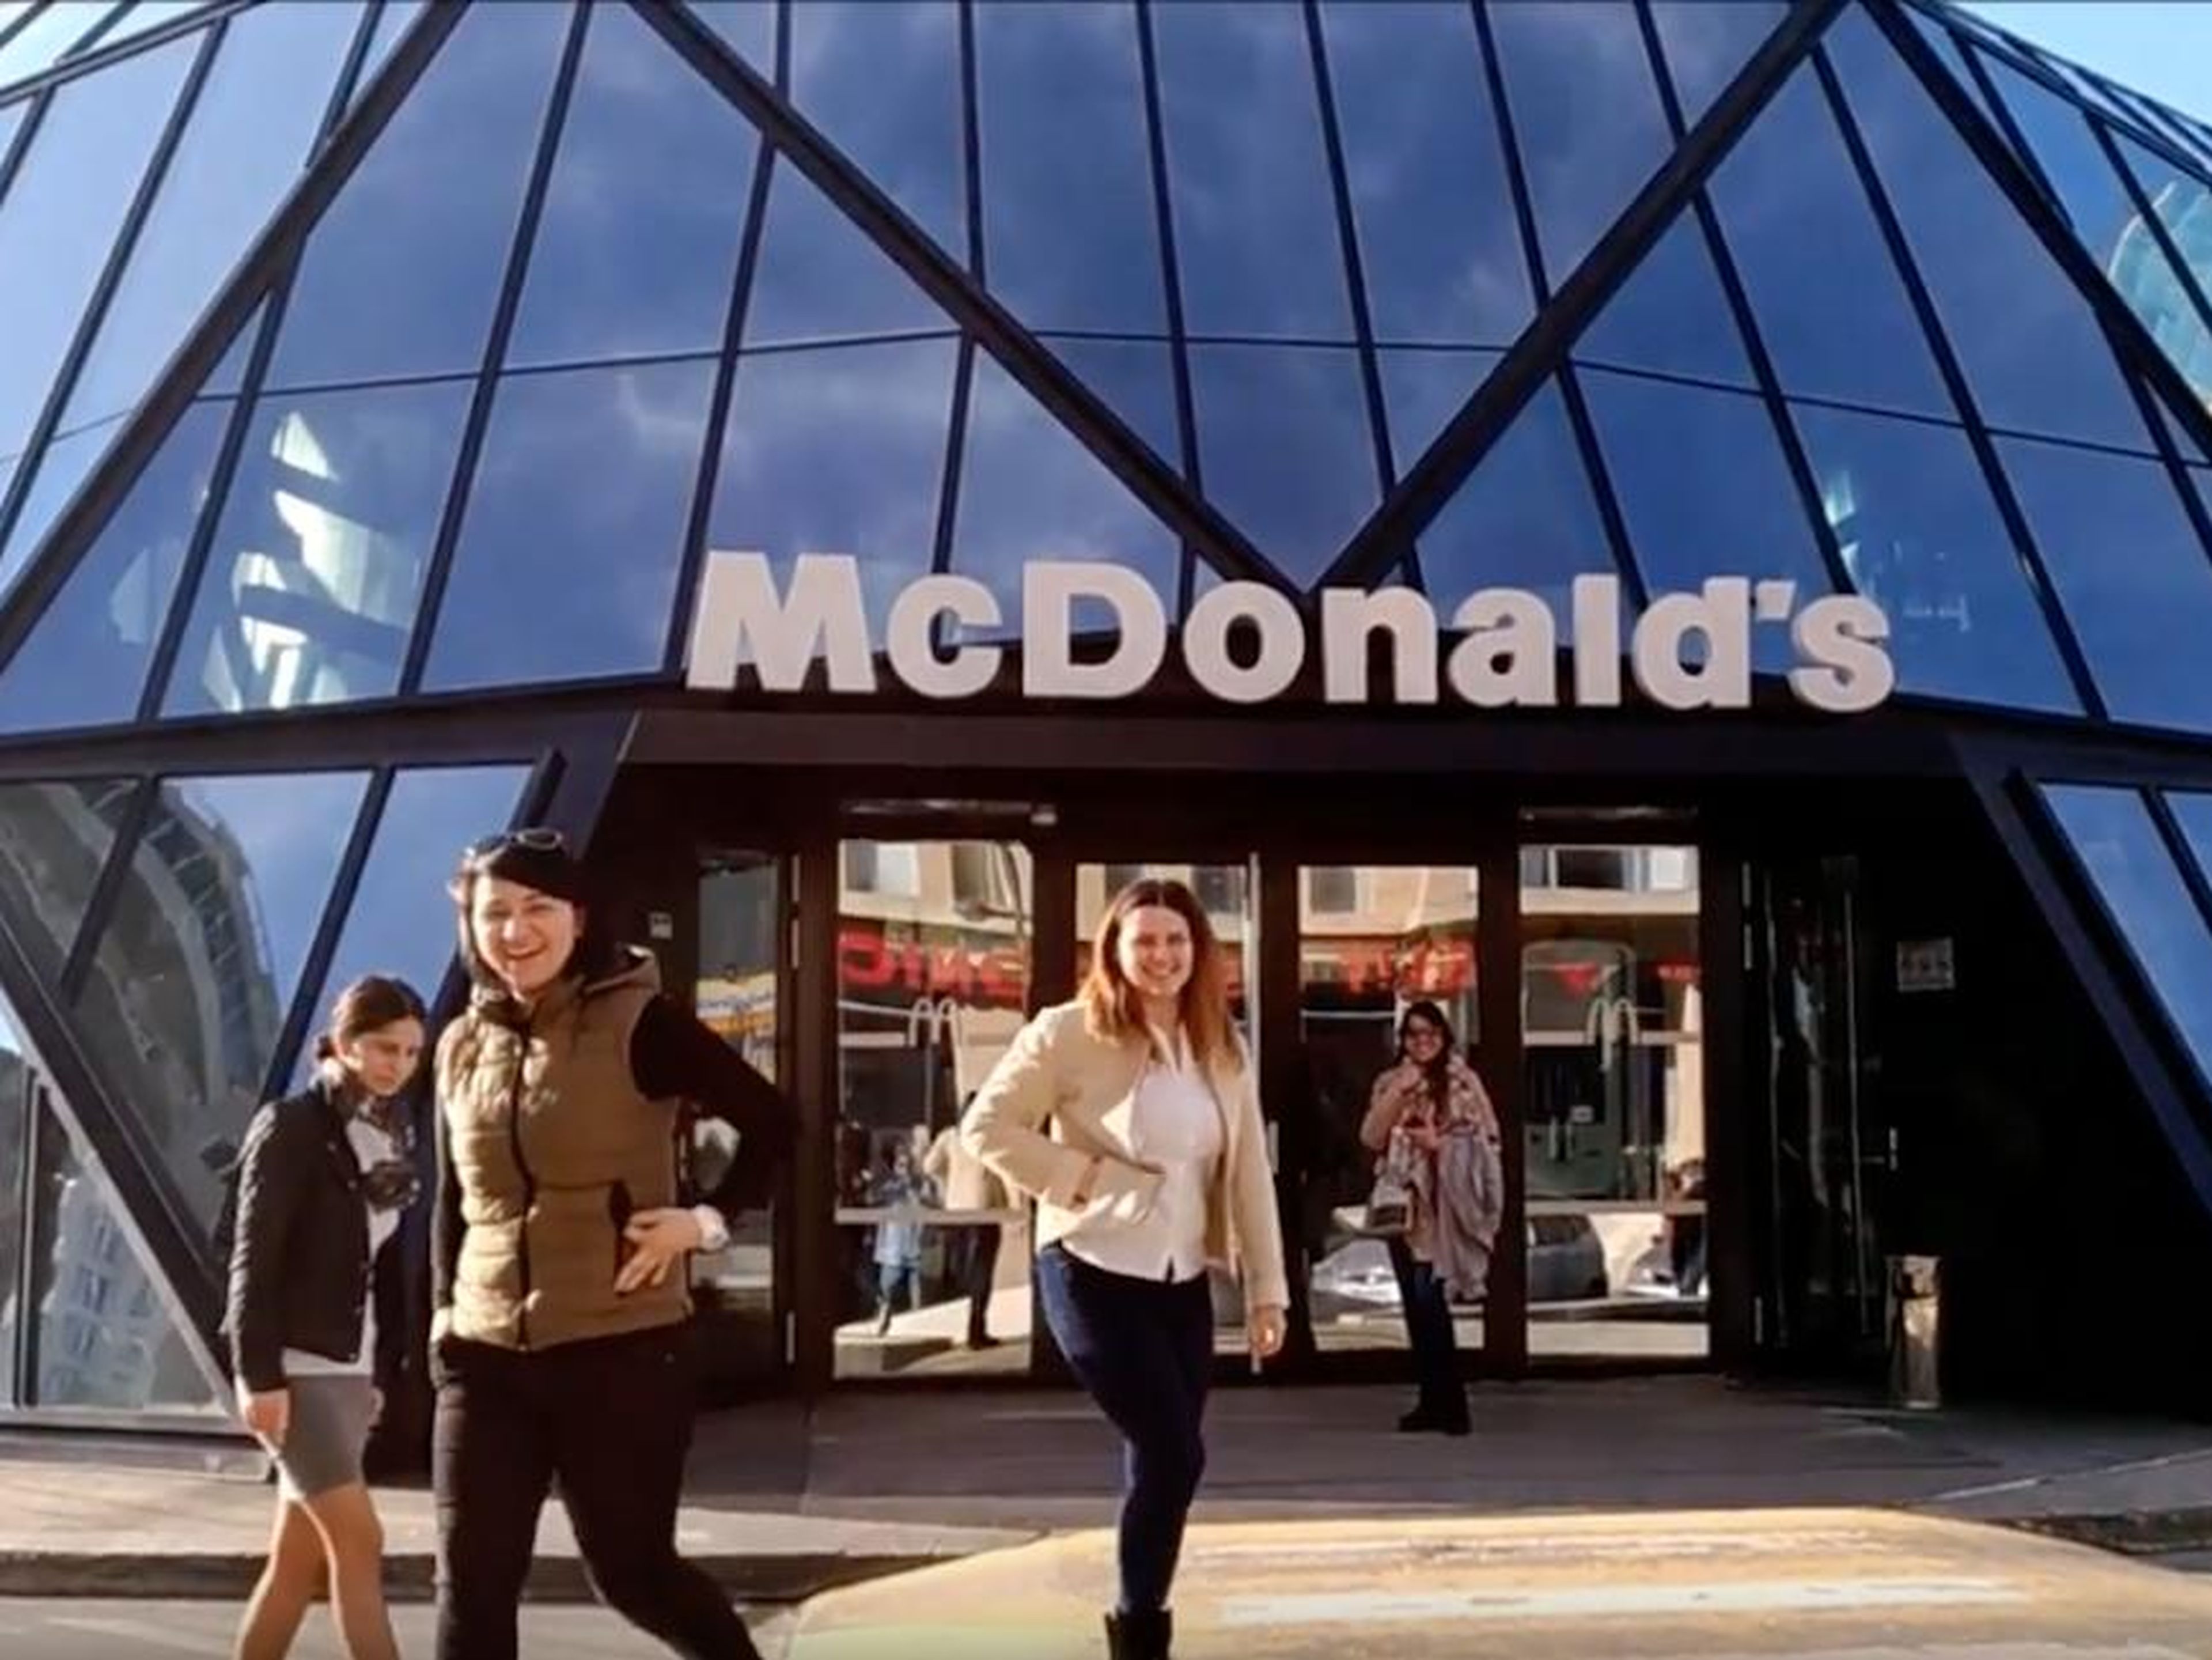 This futuristic McDonald's in Batumi, Georgia, was designed by Georgian architect Giorgi Khmaladze.